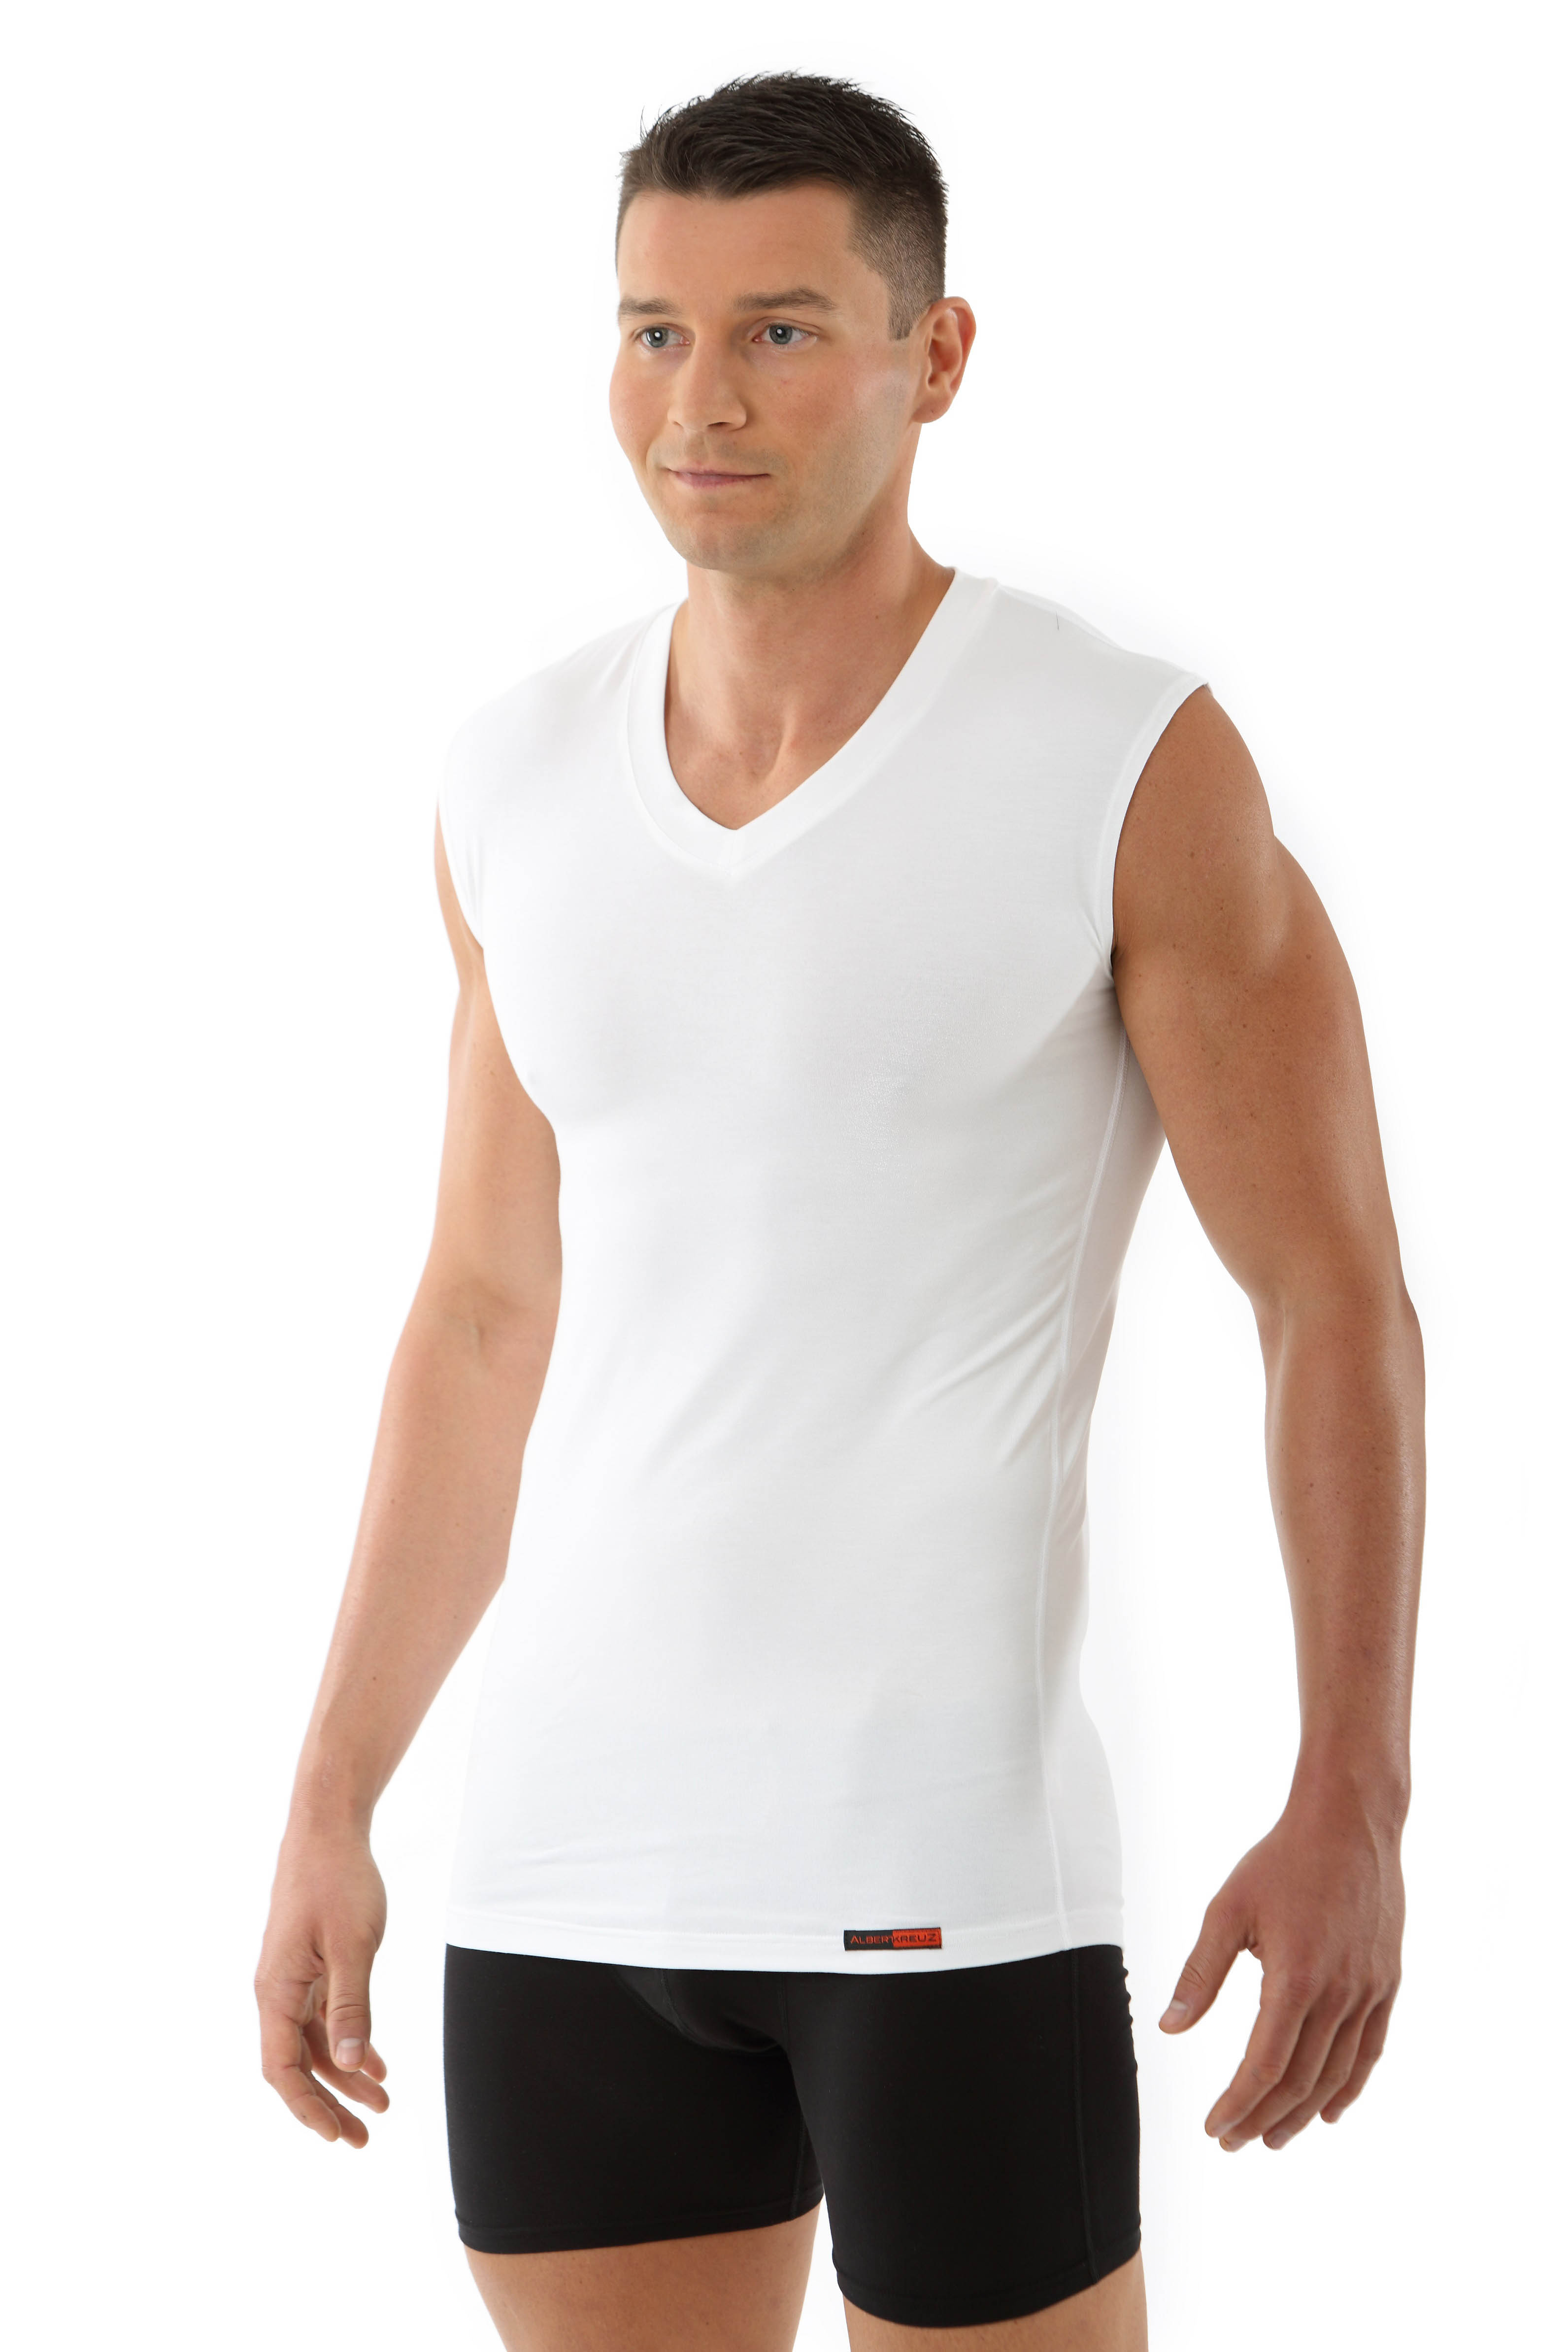 Men's undershirt sleeveless / muscle shirt 